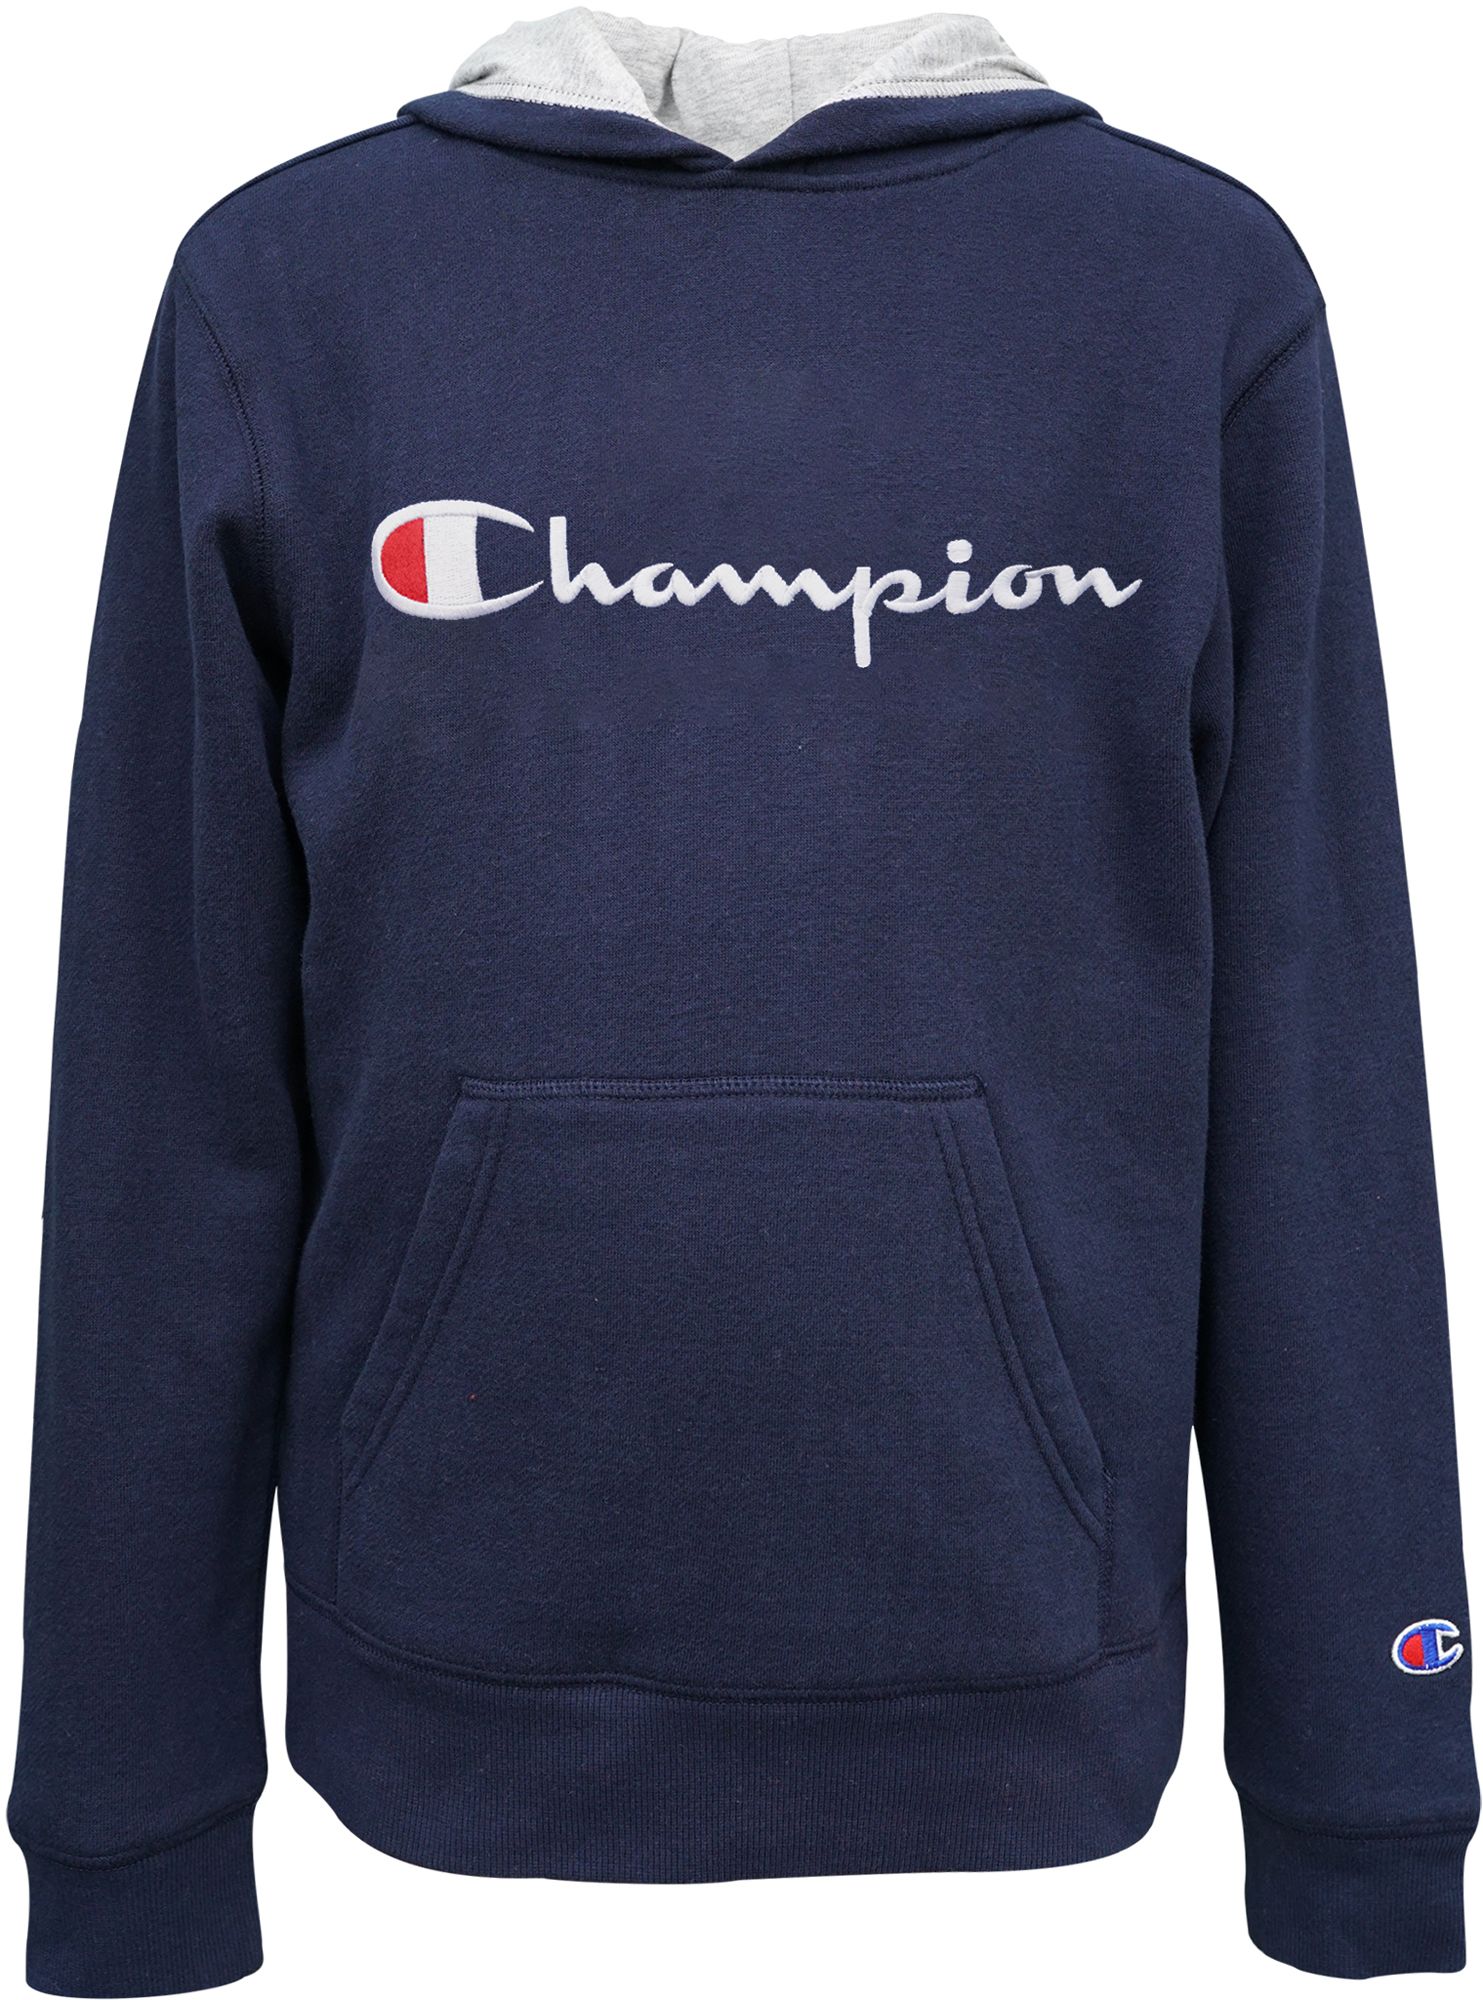 champion pullovers